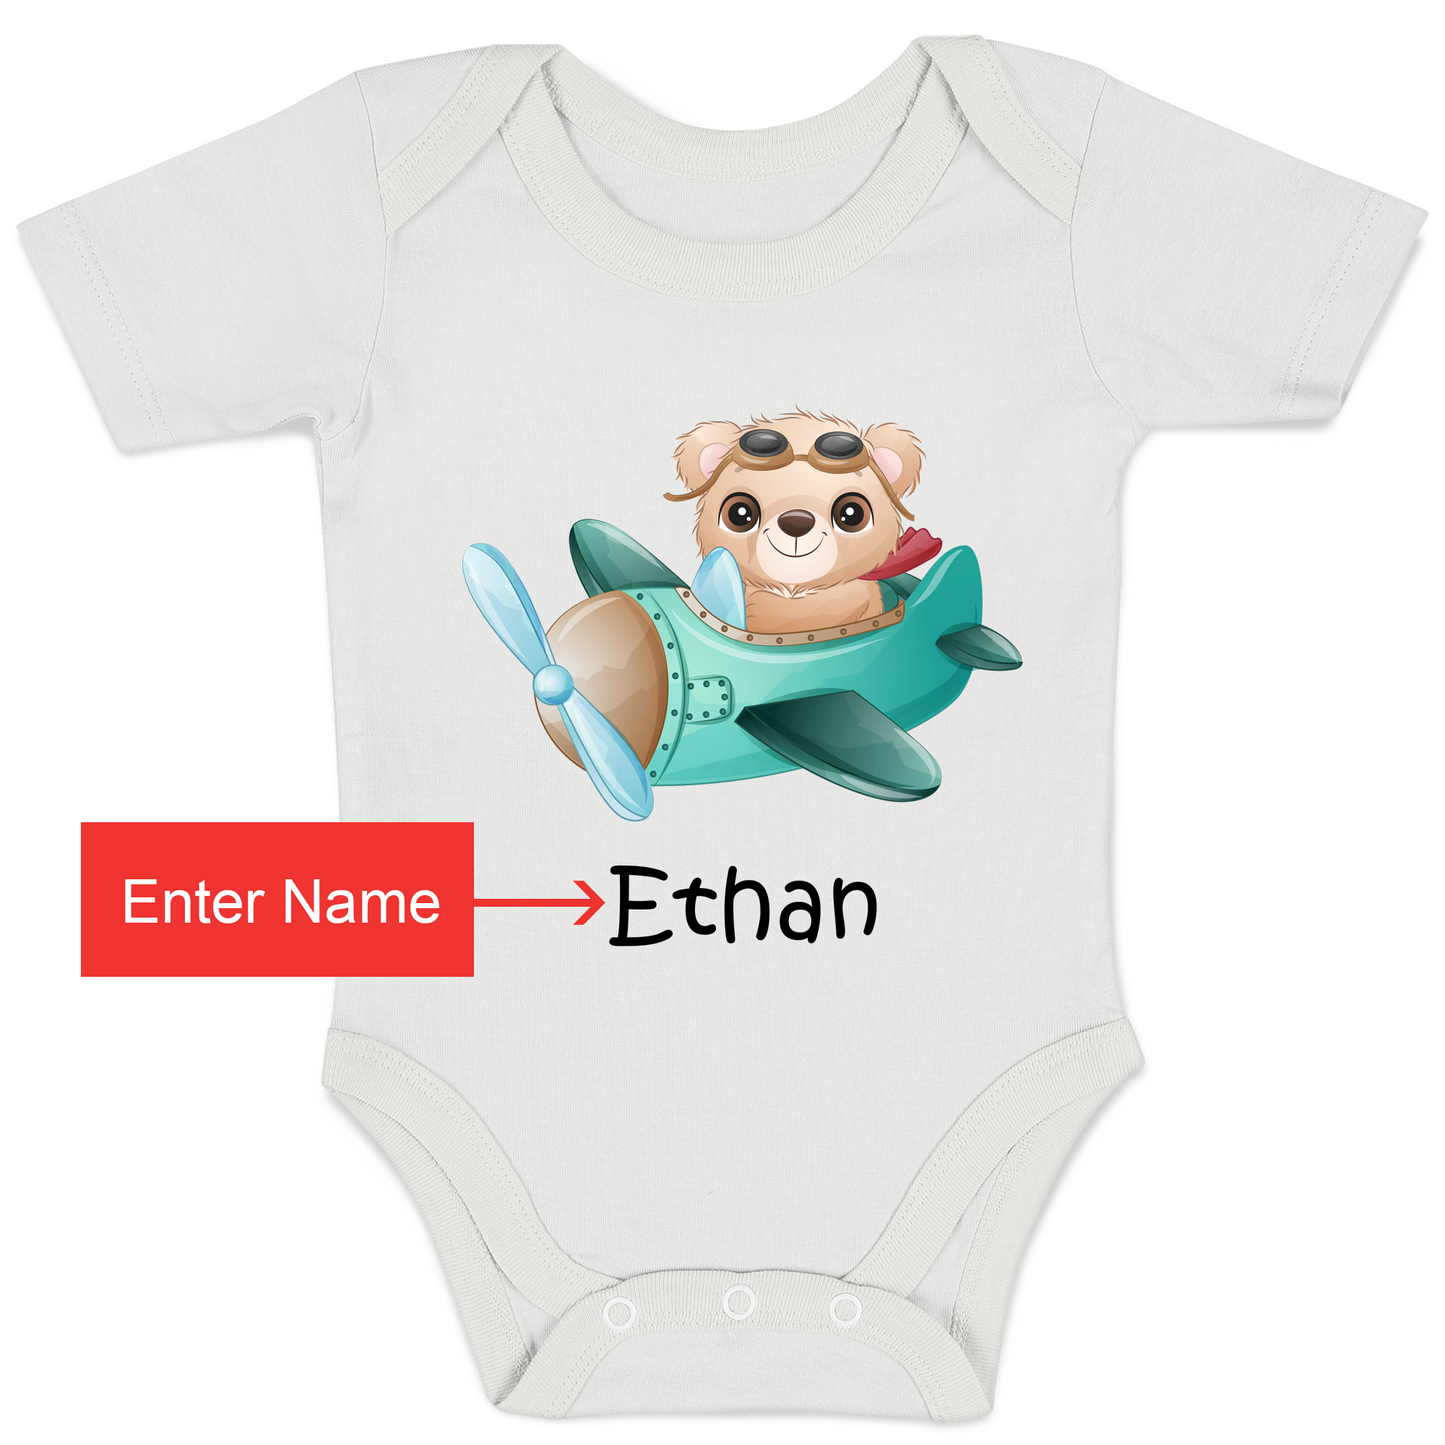 [Personalized] Endanzoo Organic Baby Bodysuit - Little Traveller (Bear)